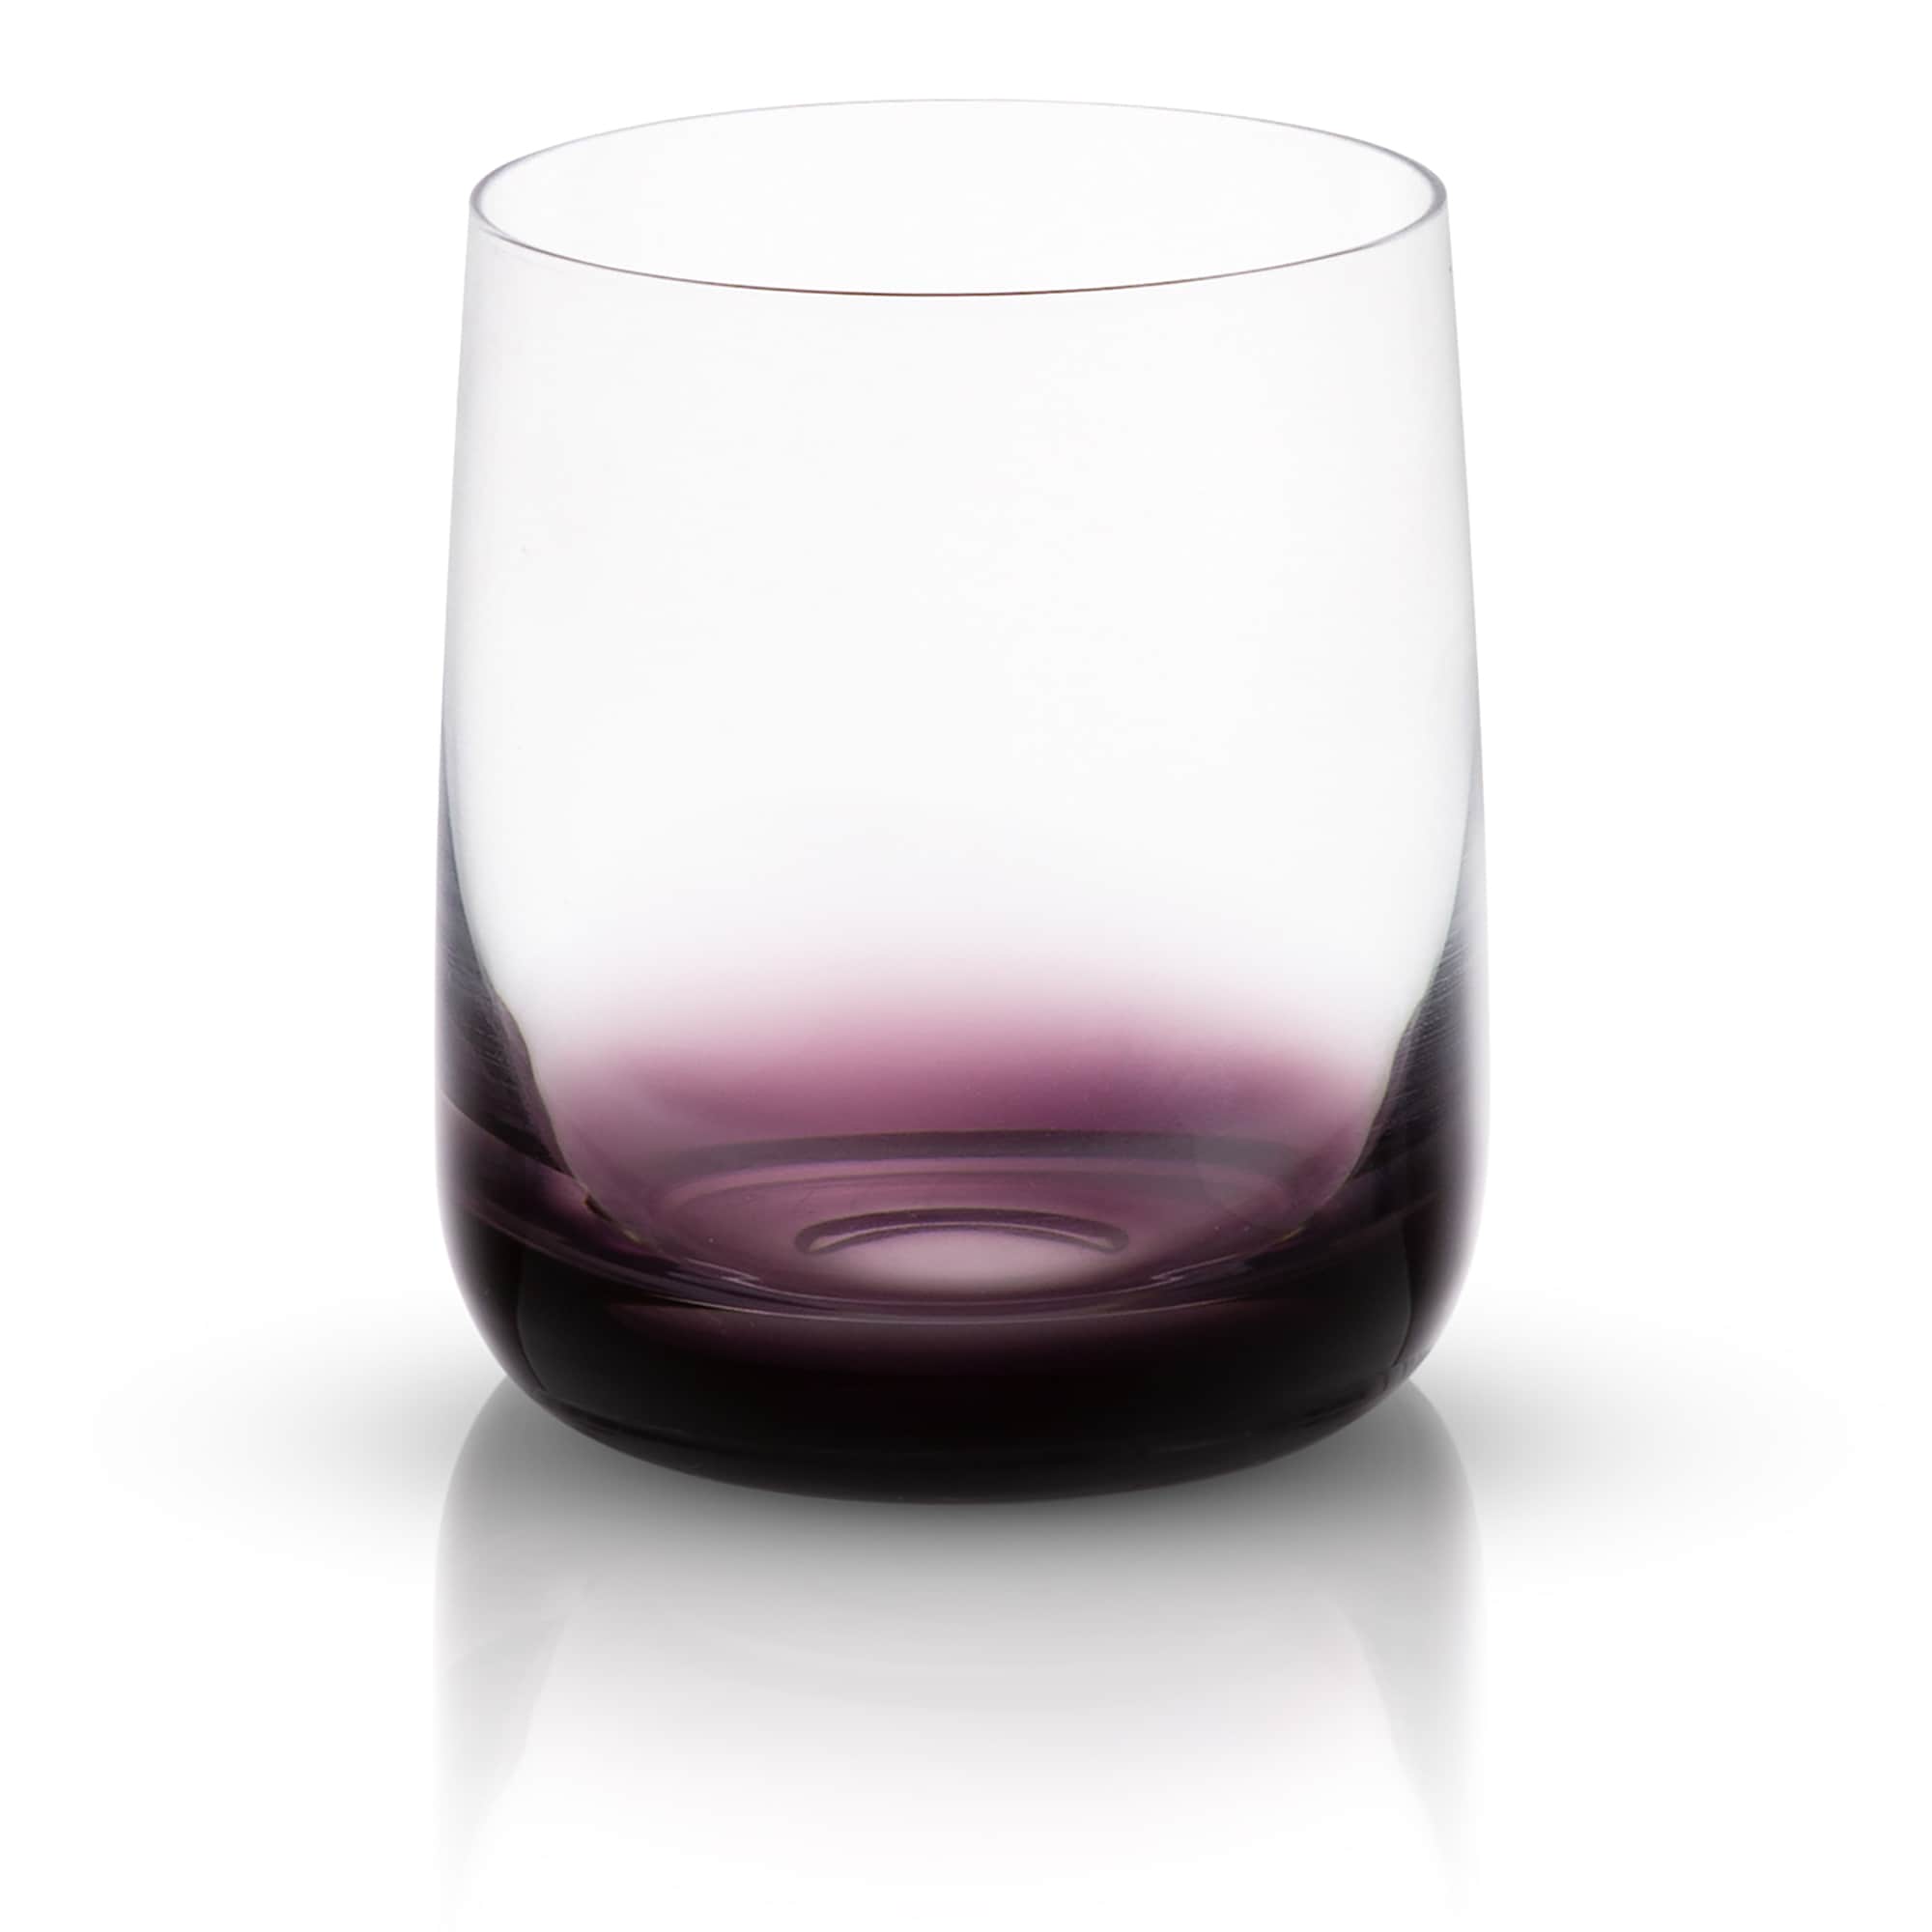 JoyJolt Black Swan Stemless White Wine Glasses, 23.1 oz Set of 4